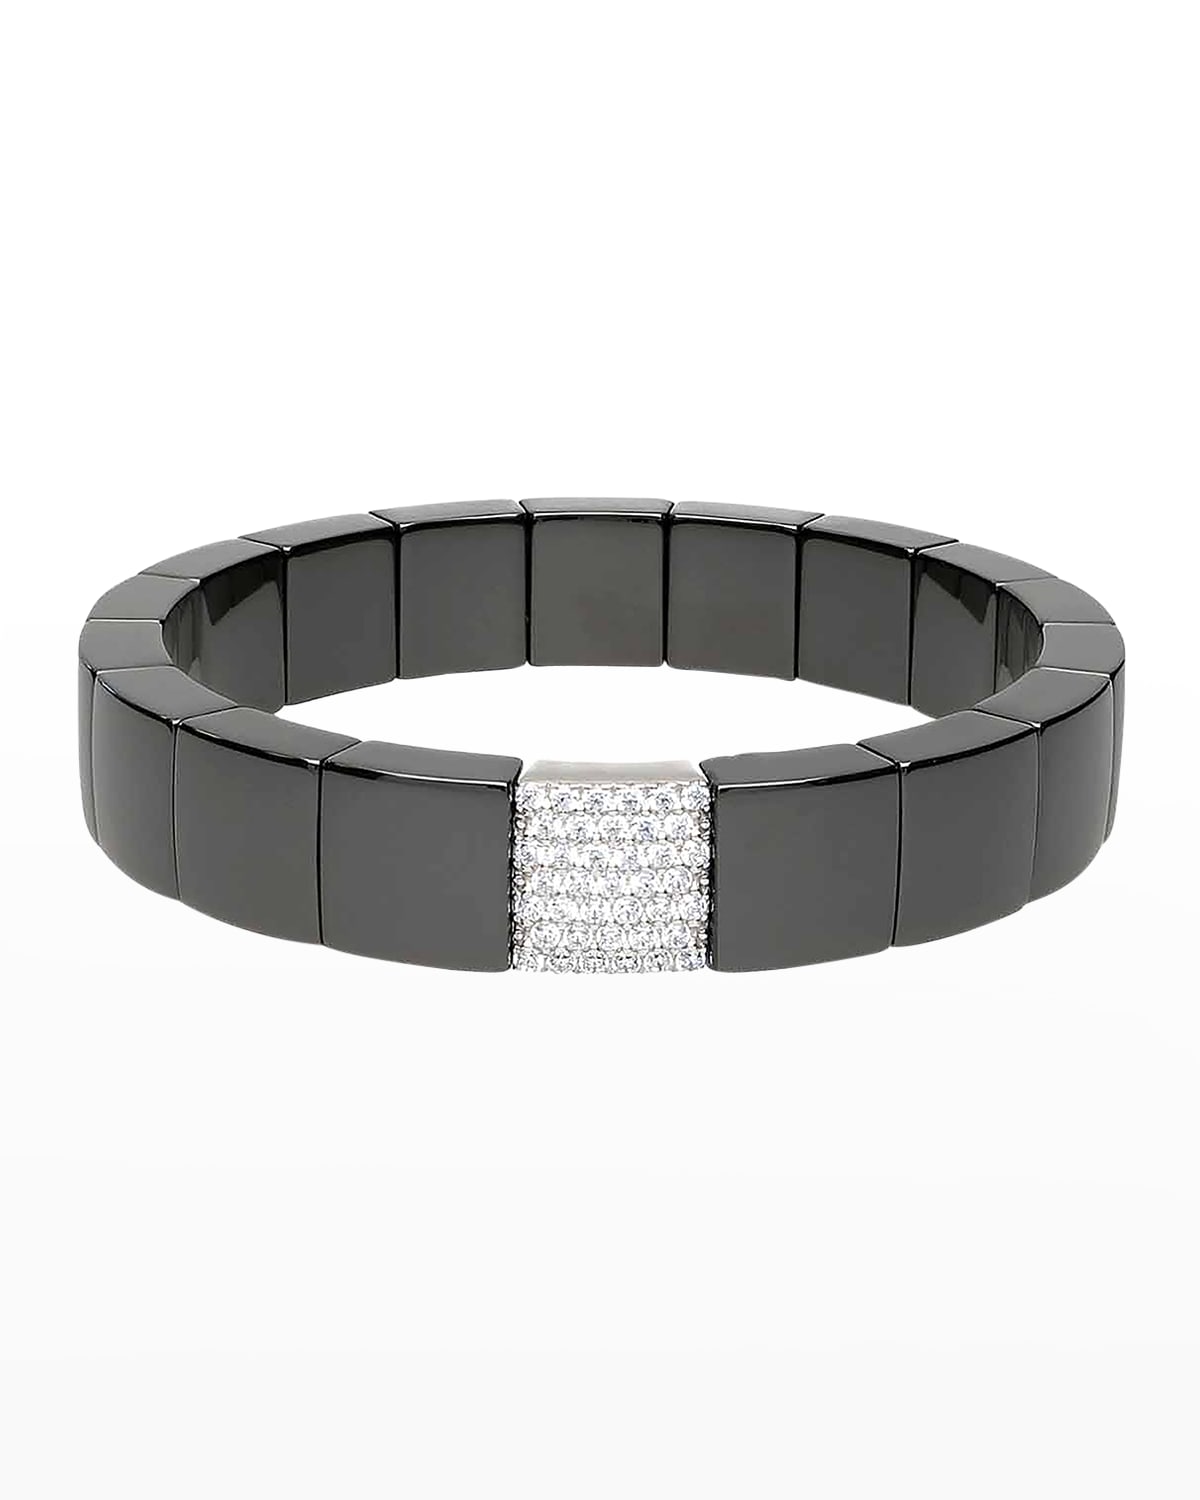 Domino Black Ceramic Stretch Link Bracelet with Pave Diamond Spacer